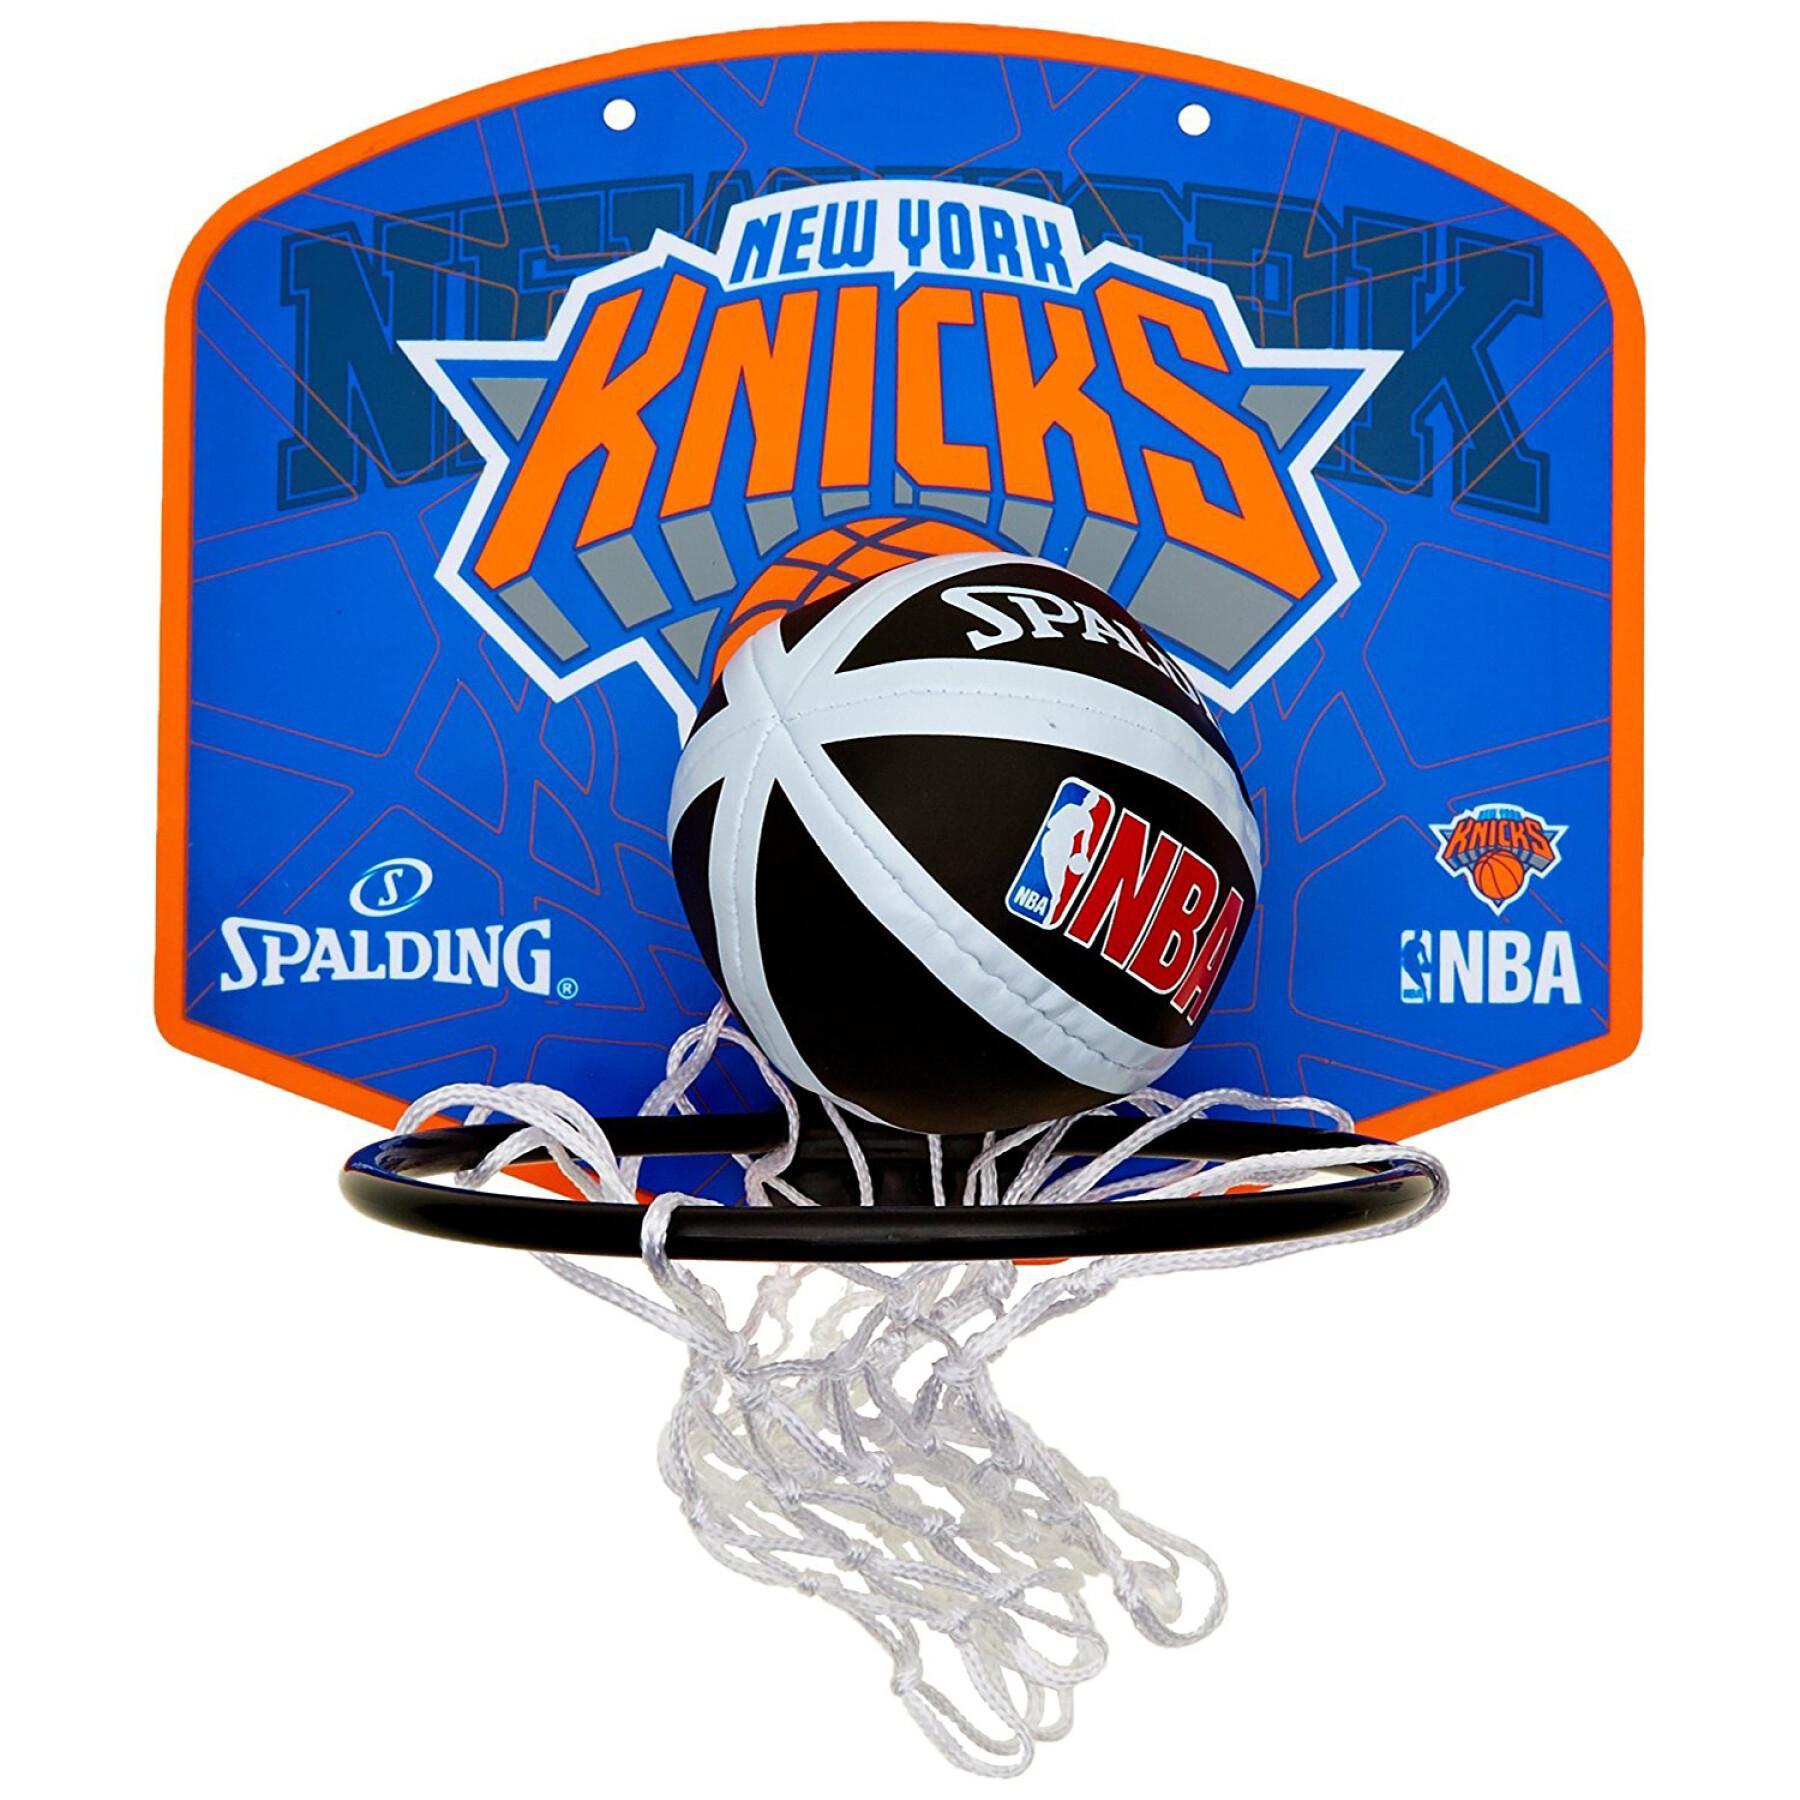 Minimand Spalding NBANewYork Knicks